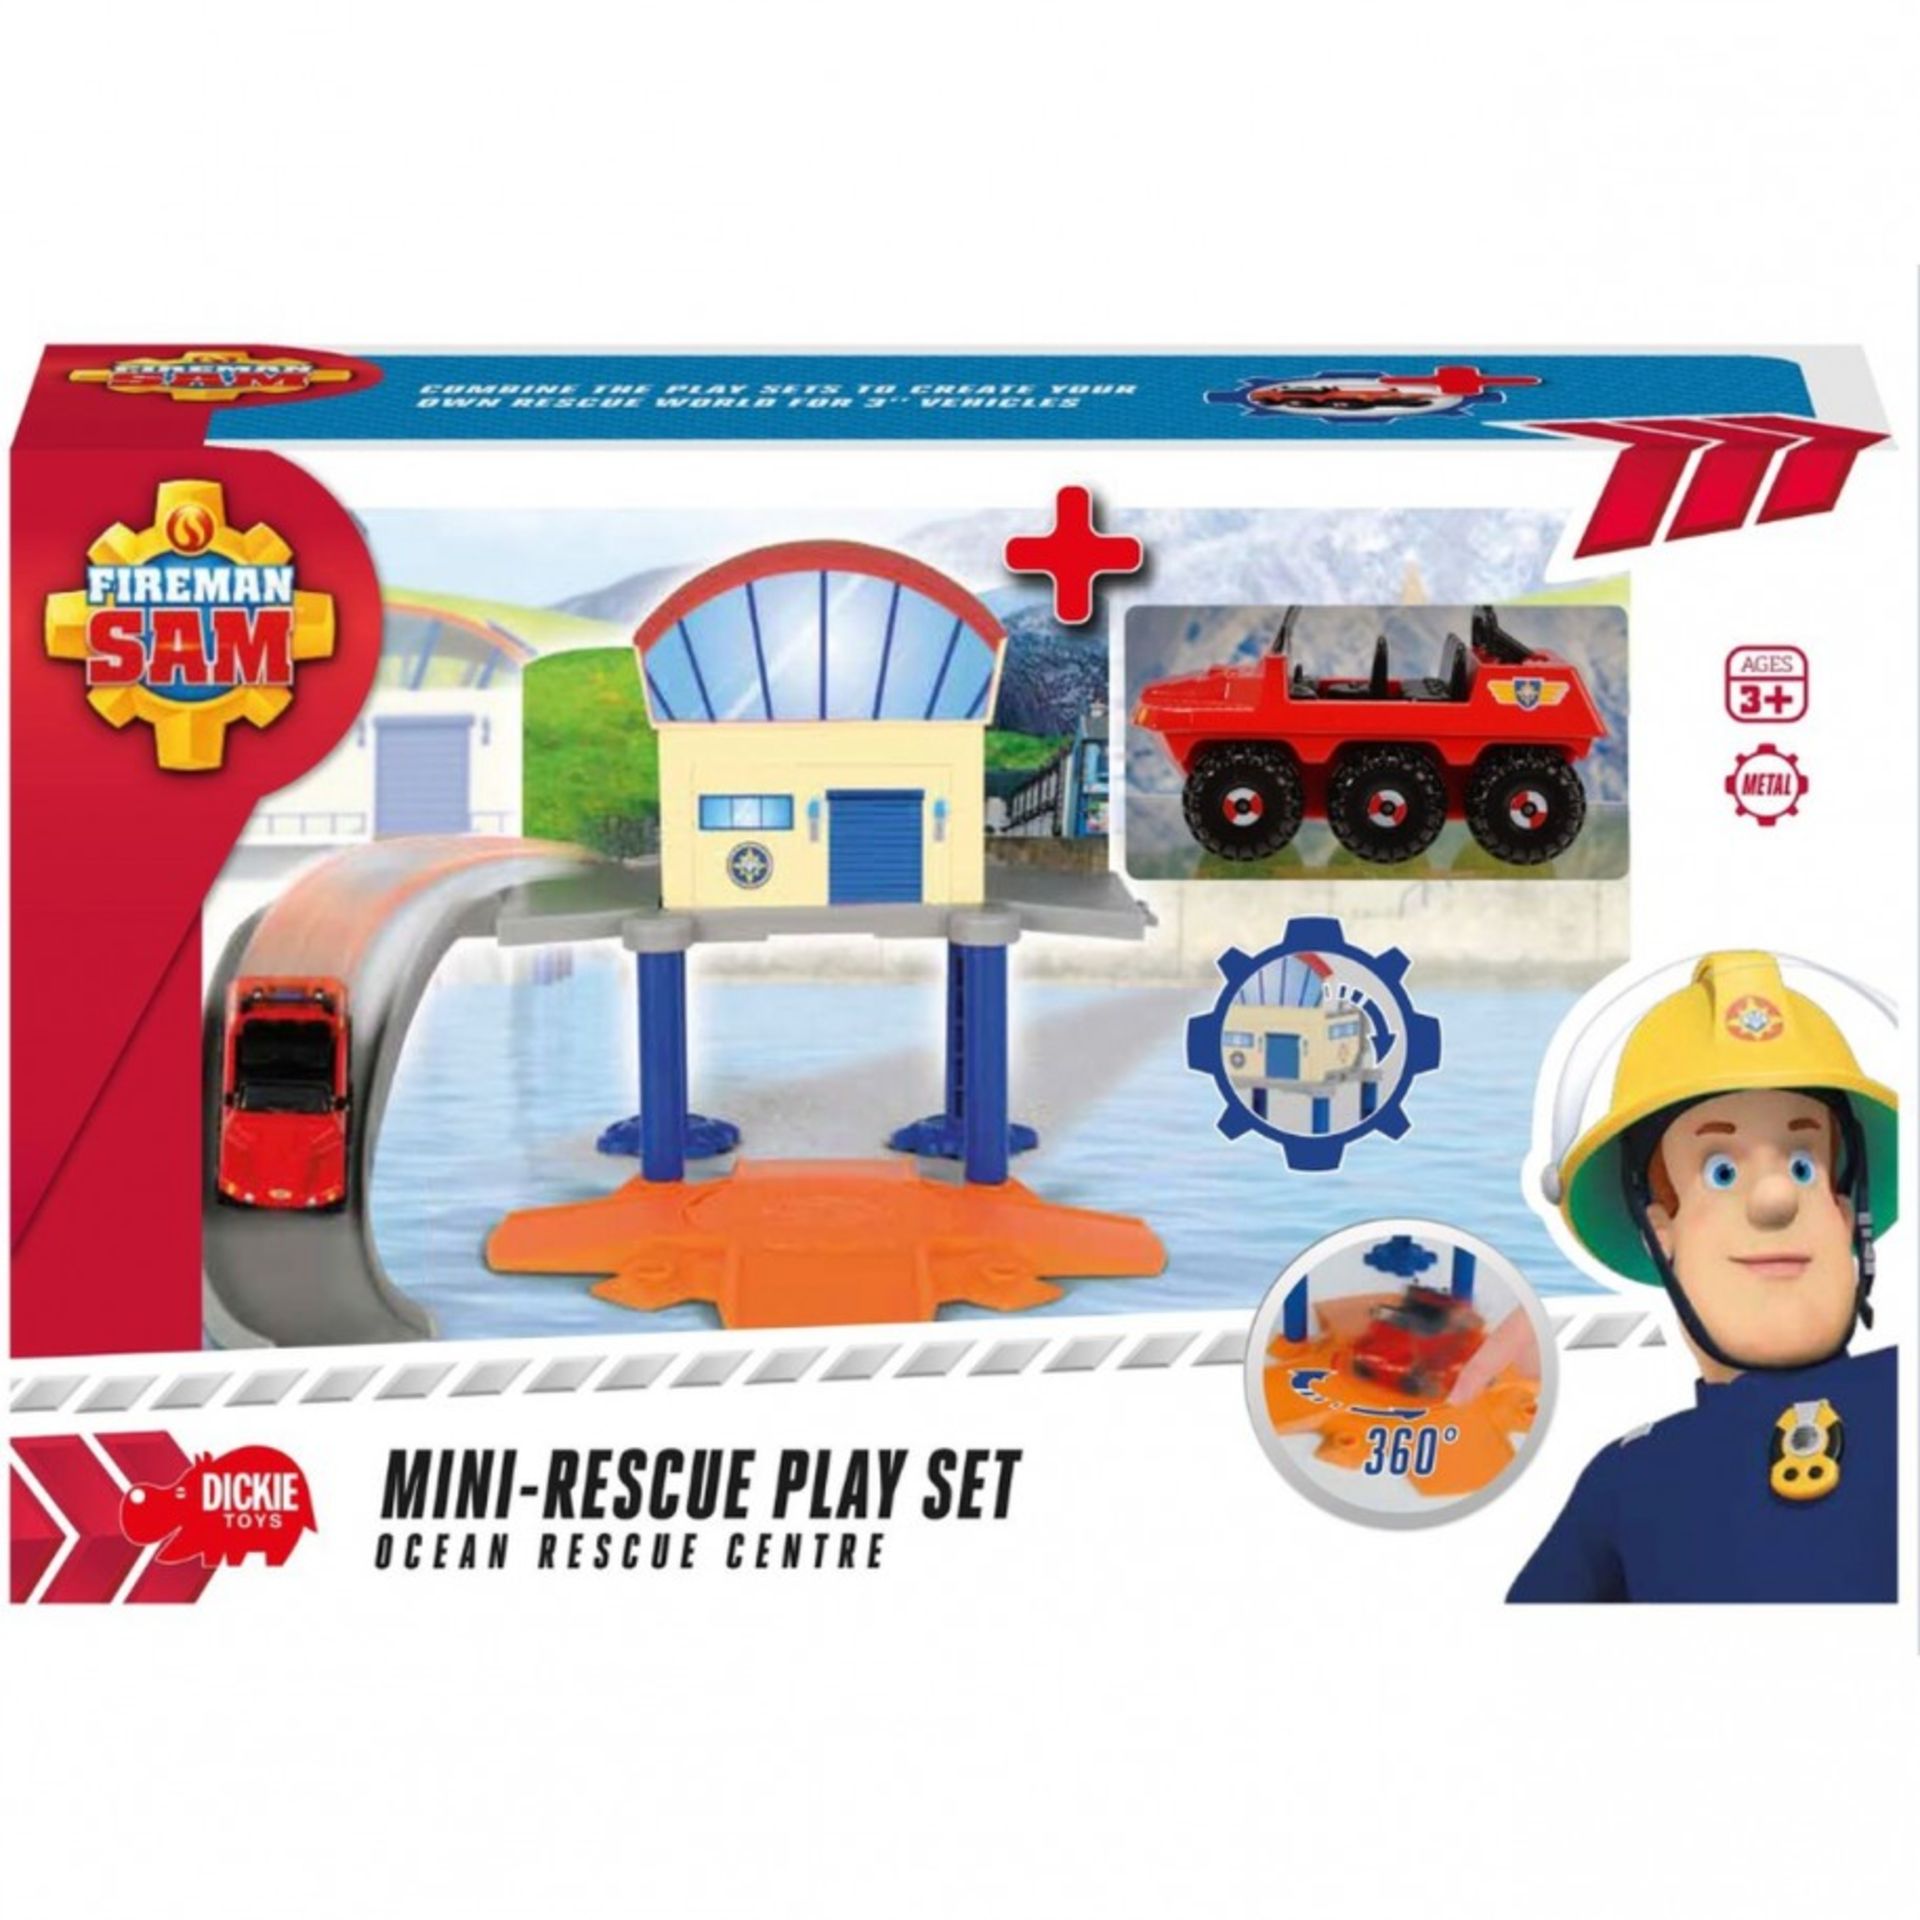 V Brand New Fireman Sam Mini-Rescue Ocean Rescue Centre Play Set ISP - £23.29 Argos X 2 YOUR BID